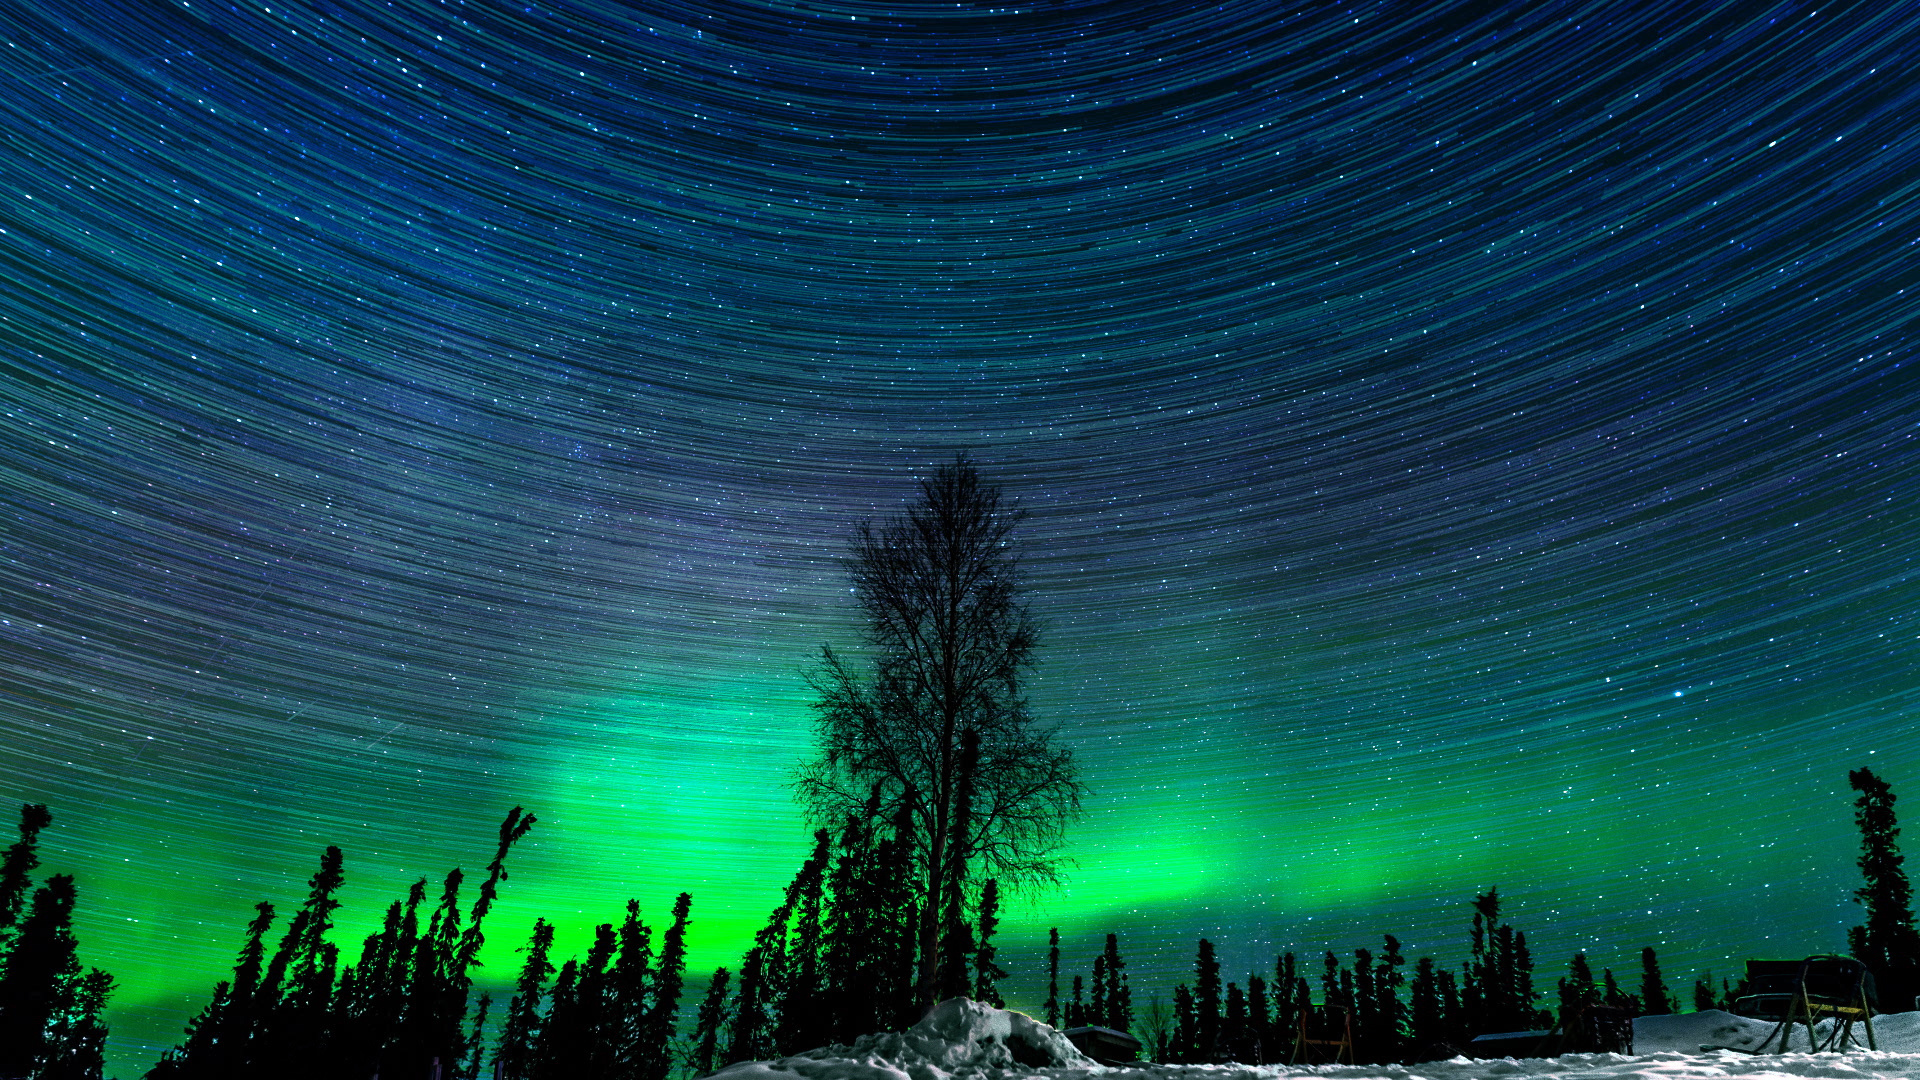 689500 descargar imagen alaska, naturaleza, tierra/naturaleza, aurora boreal, cielo estrellado, árbol: fondos de pantalla y protectores de pantalla gratis